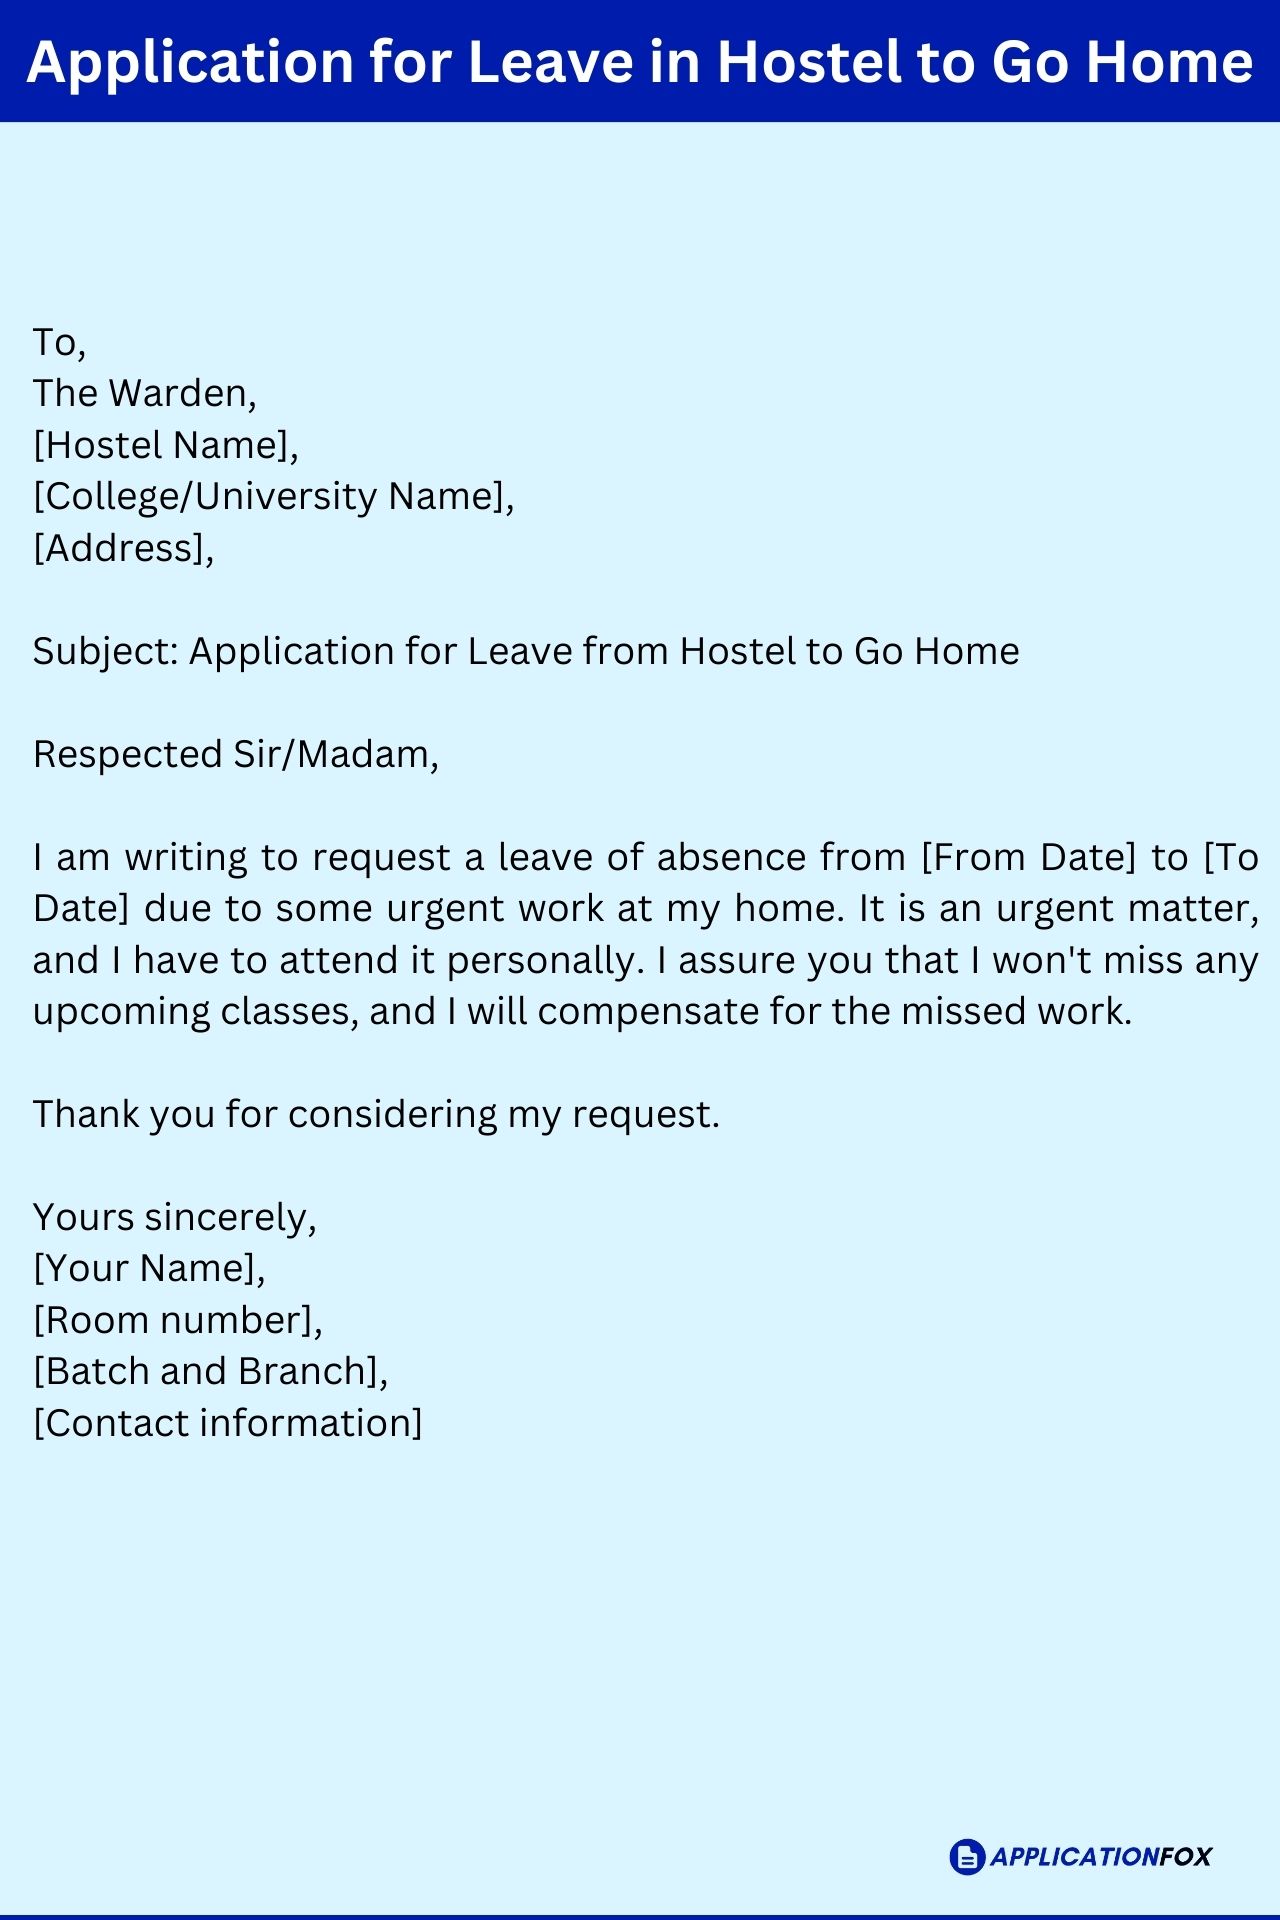 leave permission application letter for hostel warden